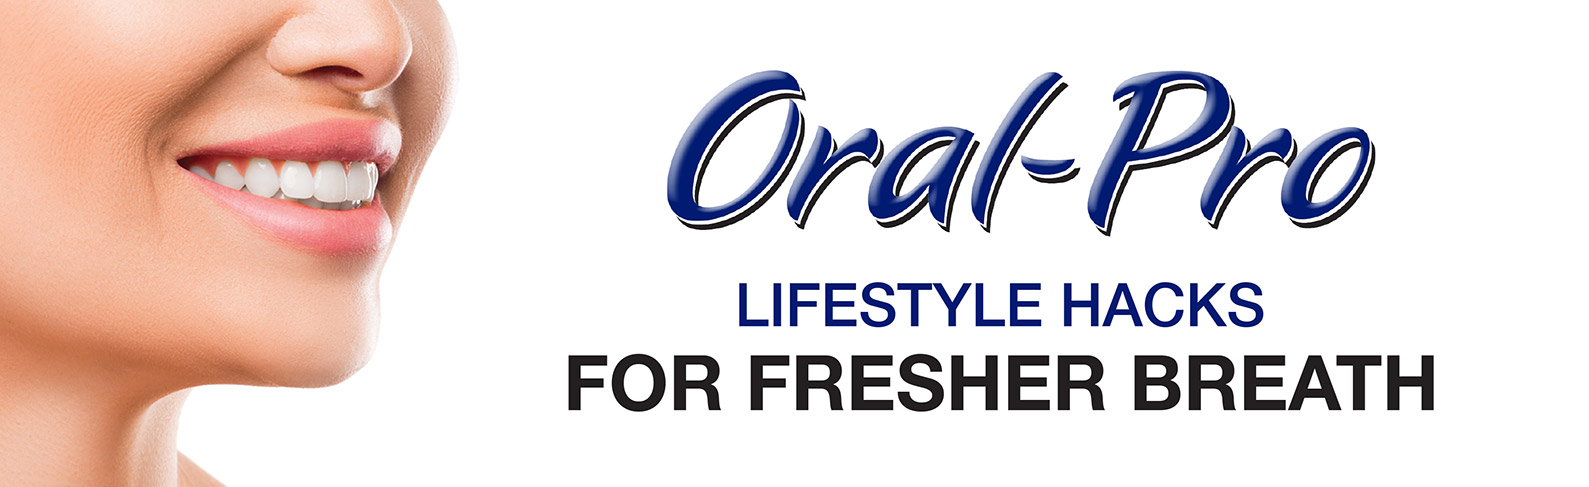 oral-pro-fresh-breath-banner.jpg